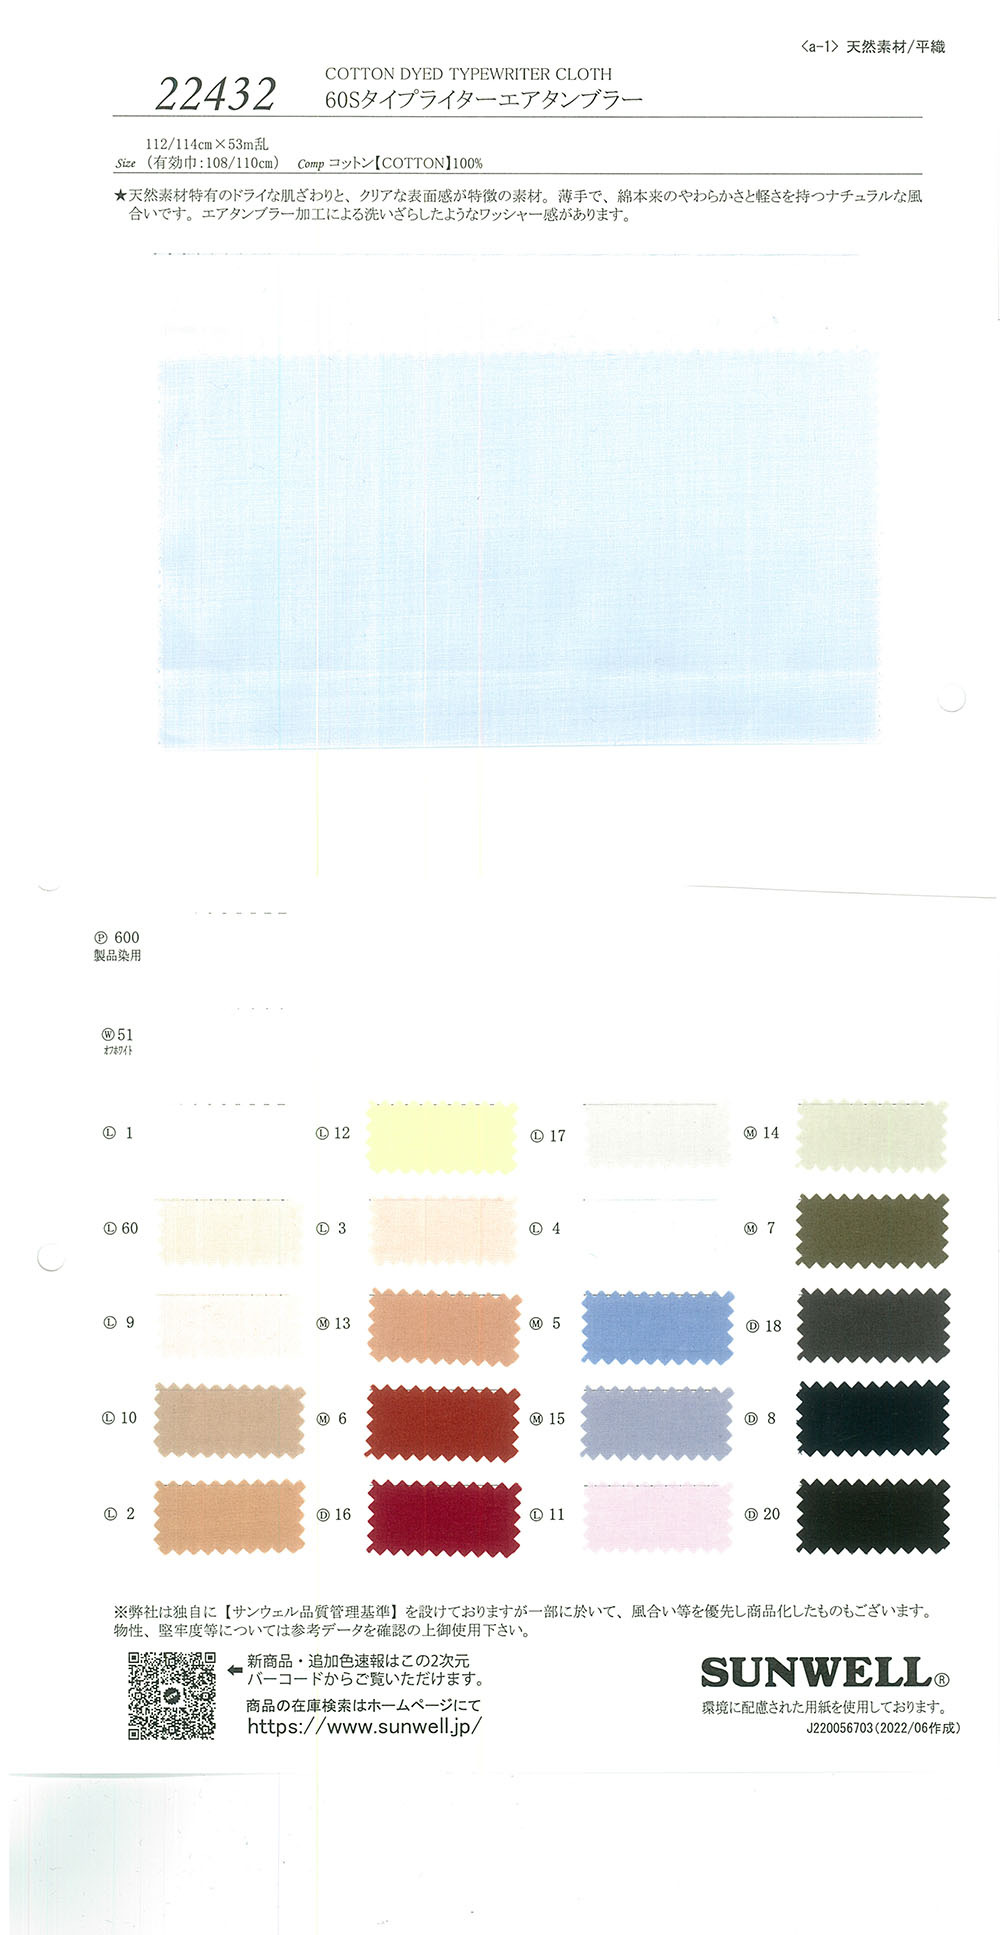 22432 60 Single Thread Typewritter Cloth Air Tunbler[Textile / Fabric] SUNWELL